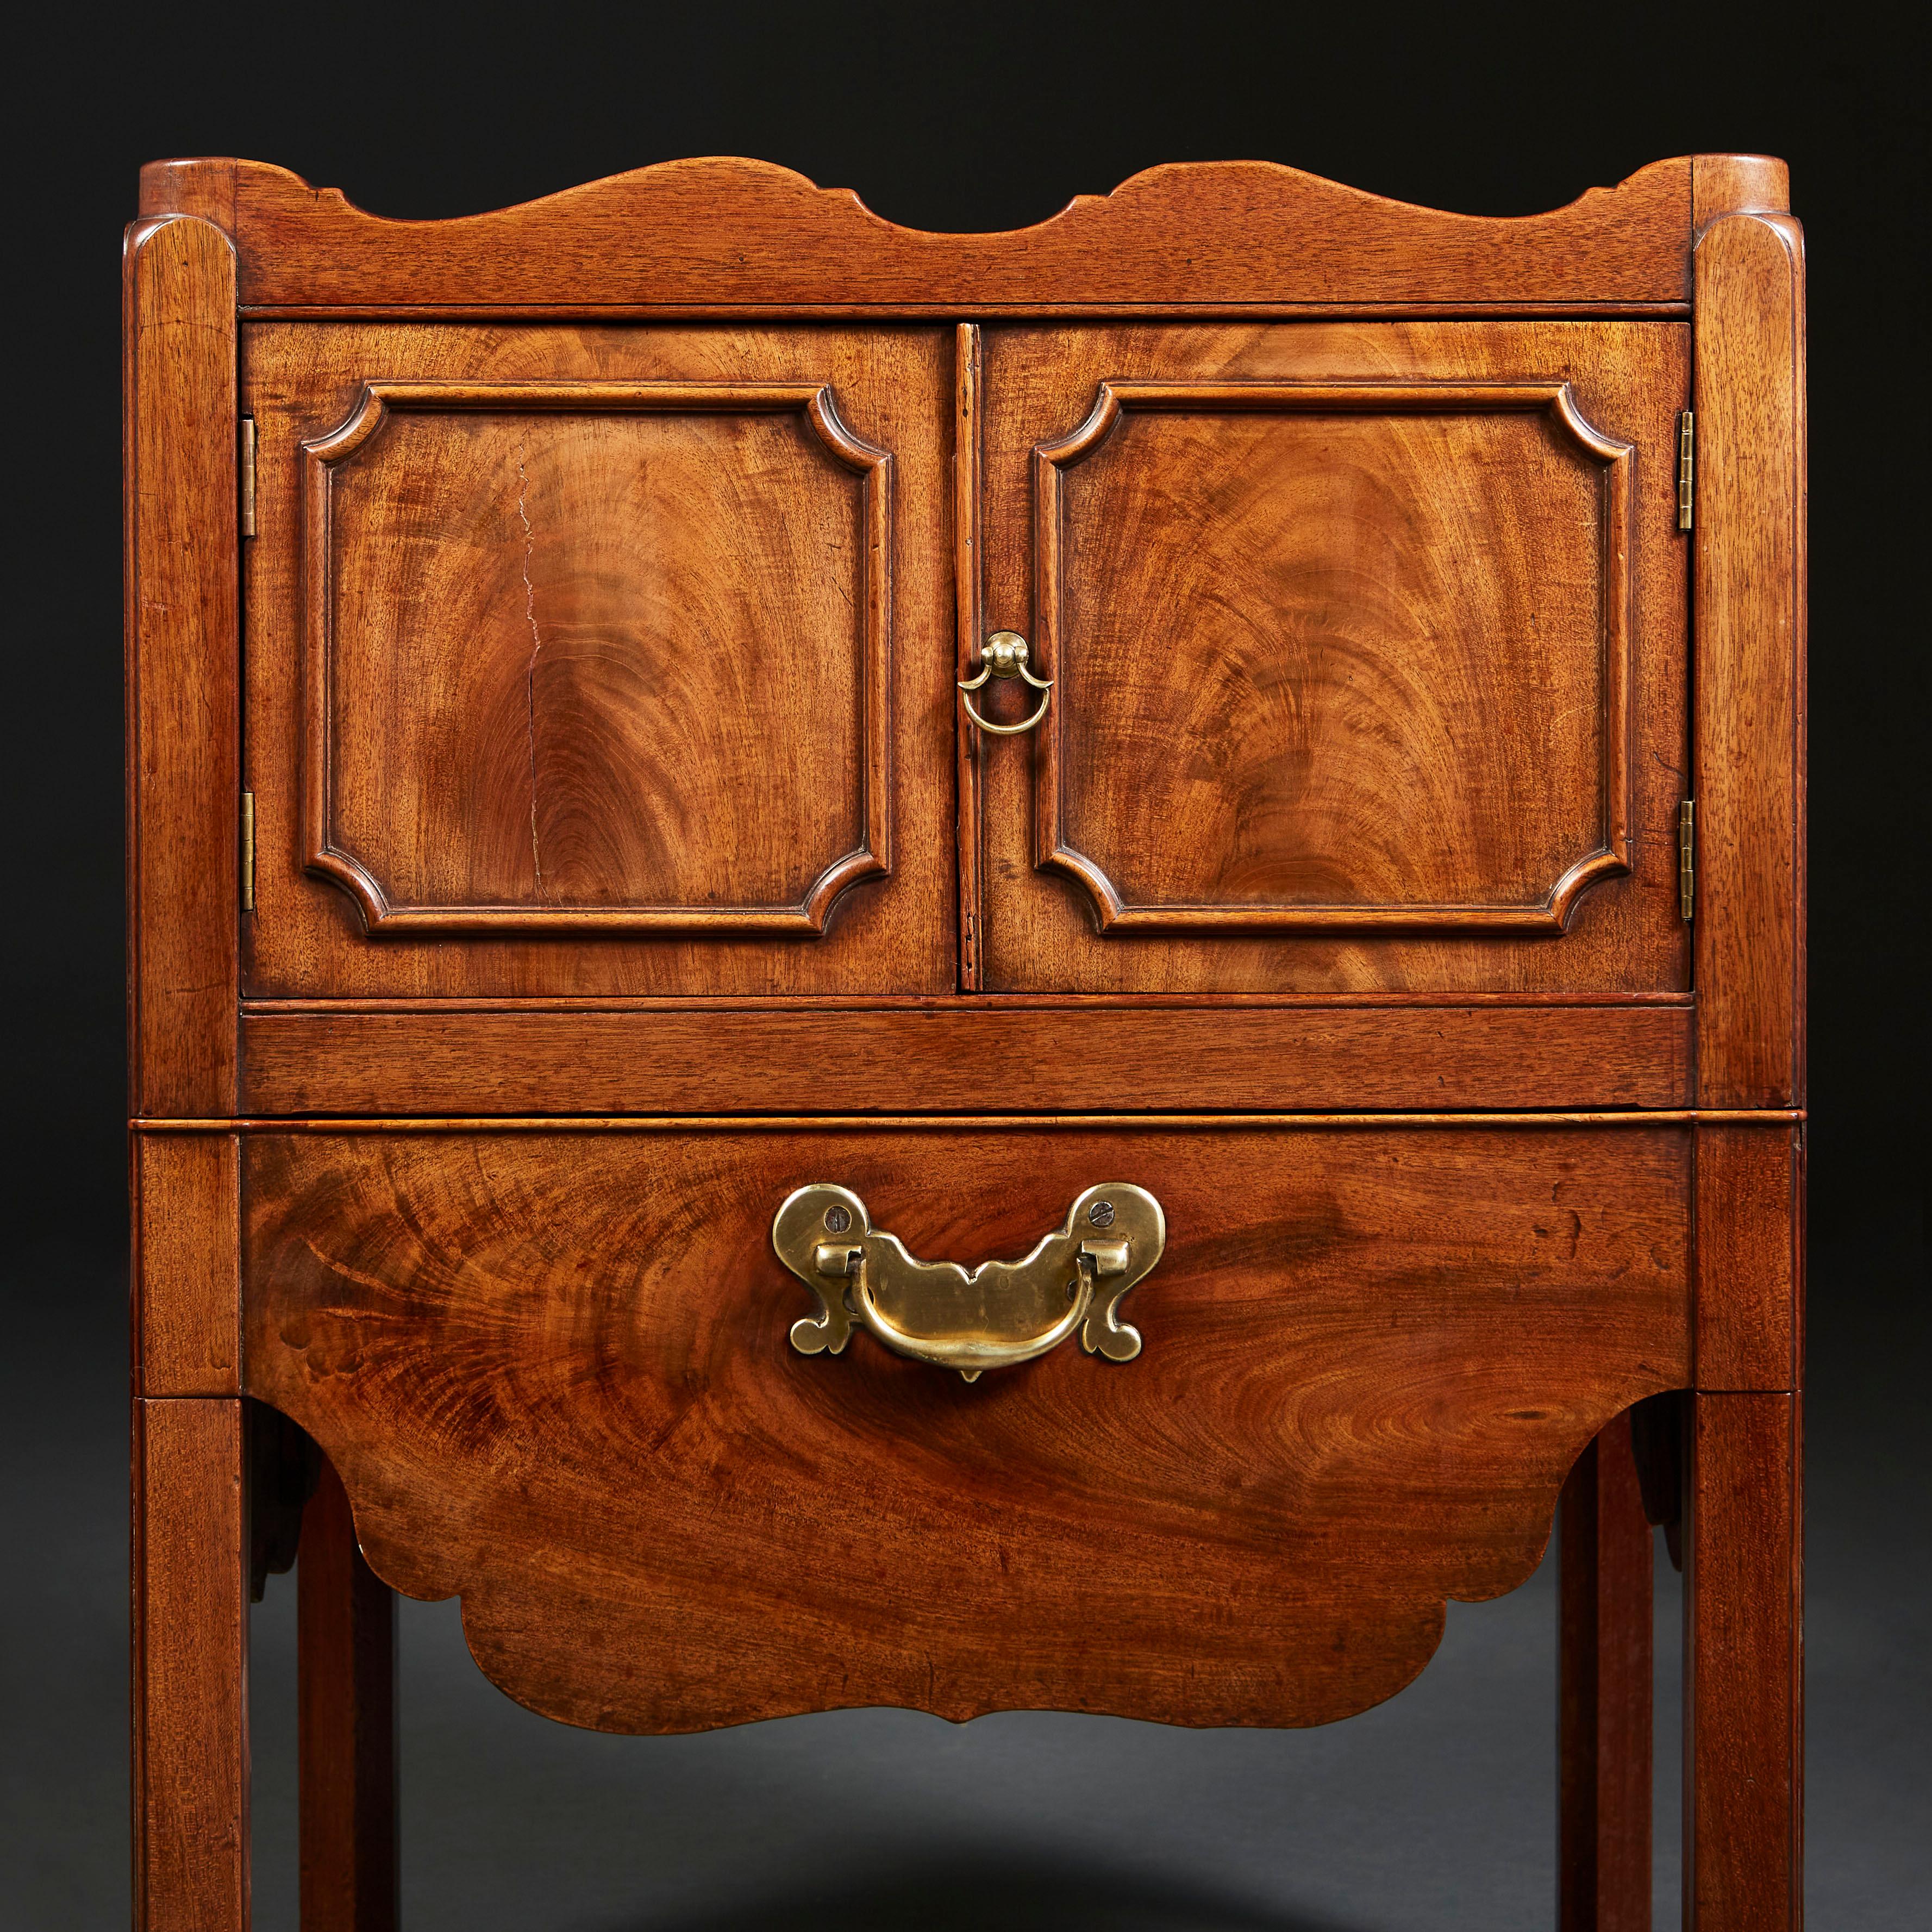 George III Georgian Flame Mahogany Wood Bedside Cabinet with Brass Handles